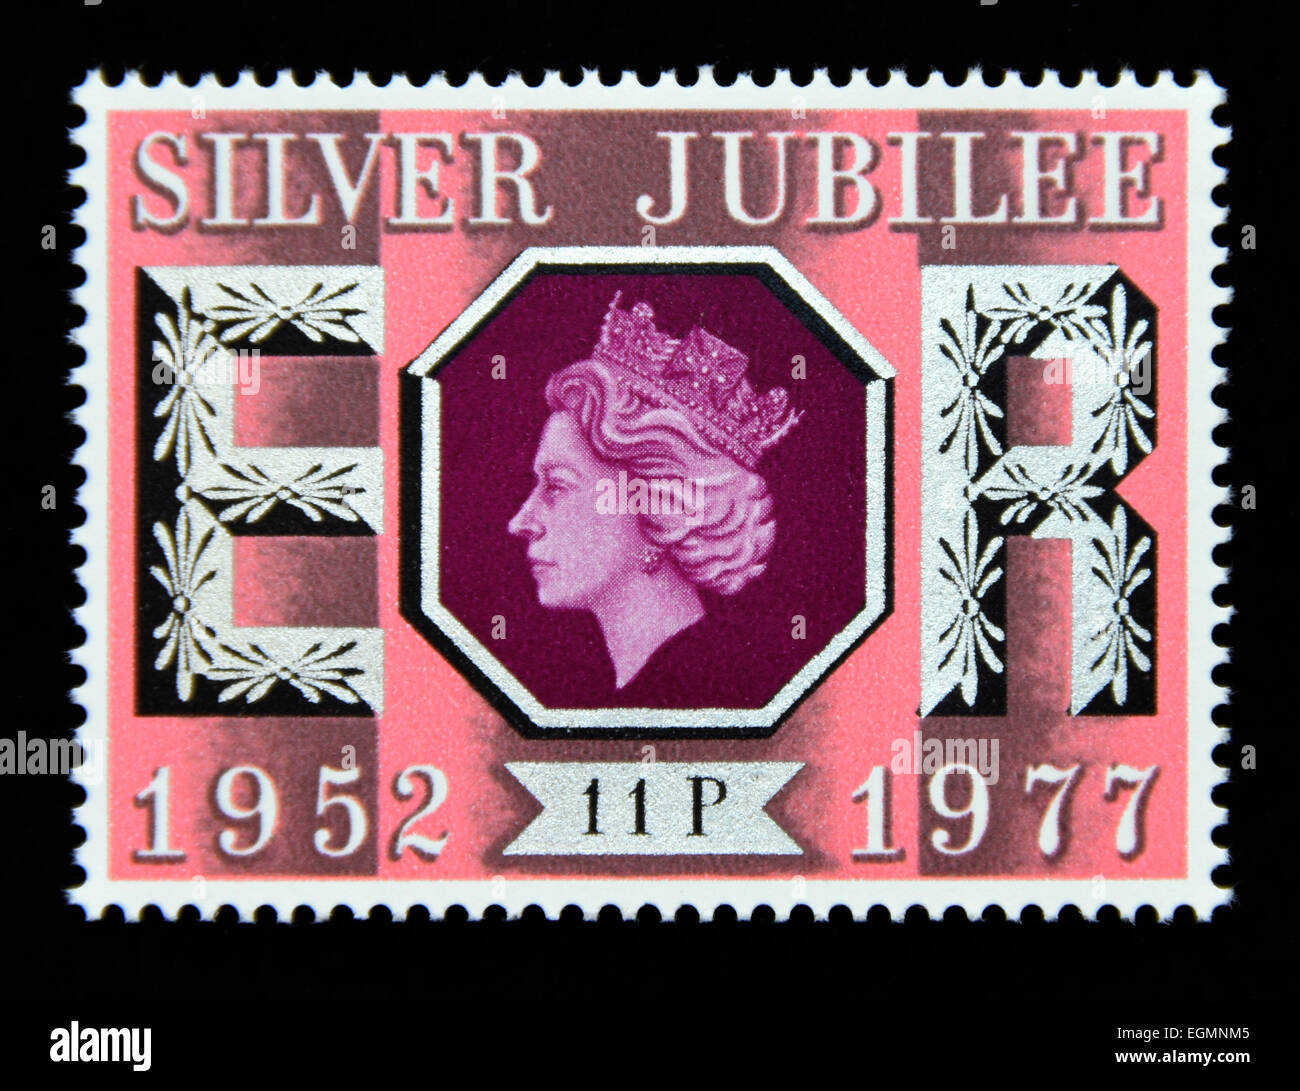 Postage stamp. Great Britain. Queen Elizabeth II. 1977. Silver Jubillee 1952-1977. 11p. Stock Photo